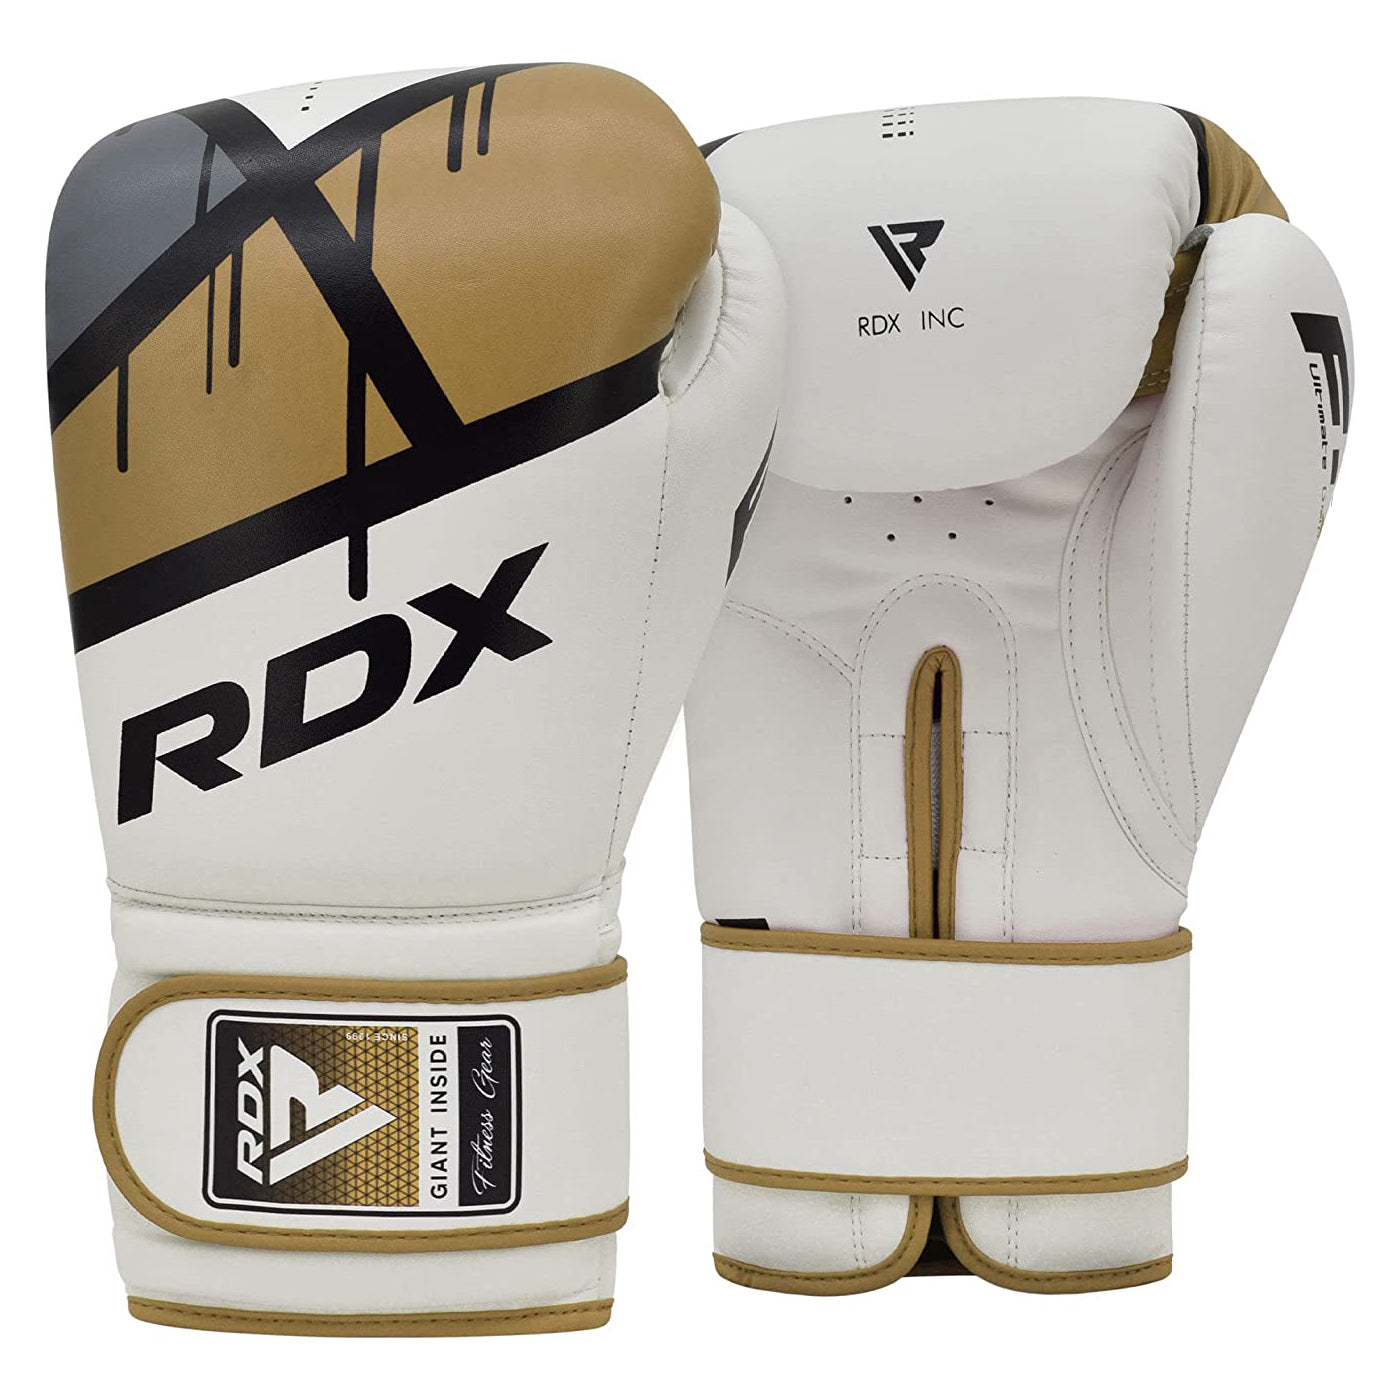 RDX F7 EGO MMA, BJJ, Muay Thai, Kickboxing, Training Boxing Gloves - GOLDEN - 10OZ - Pro-Distributing